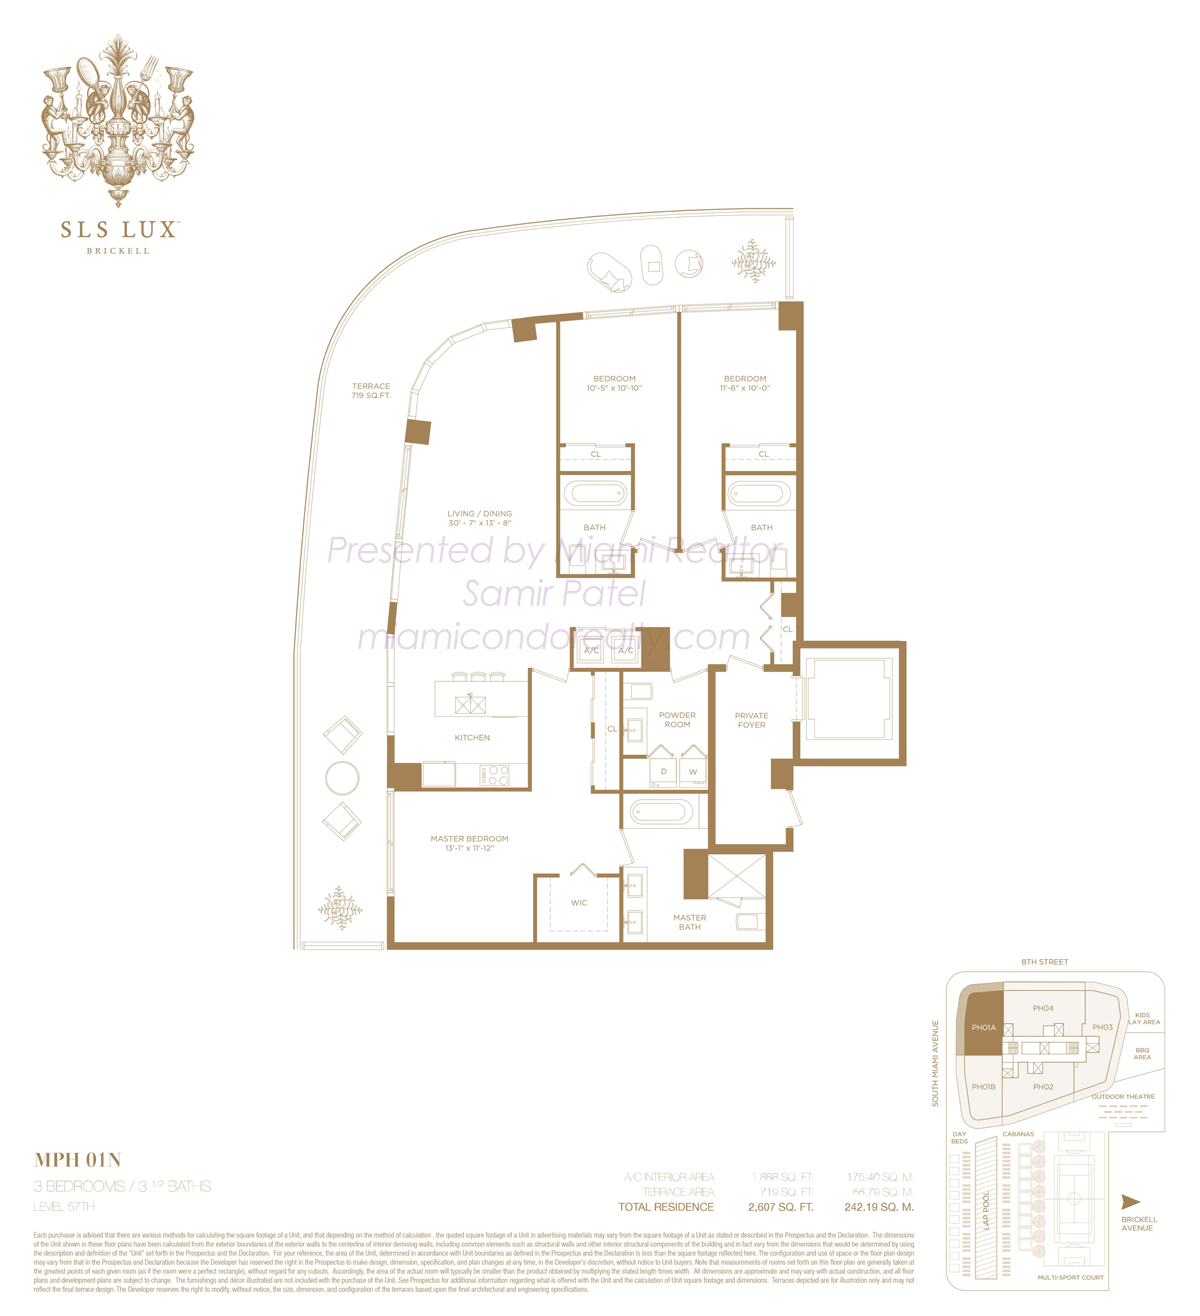 SLS LUX Brickell Middle Penthouse 01 North Floorplan